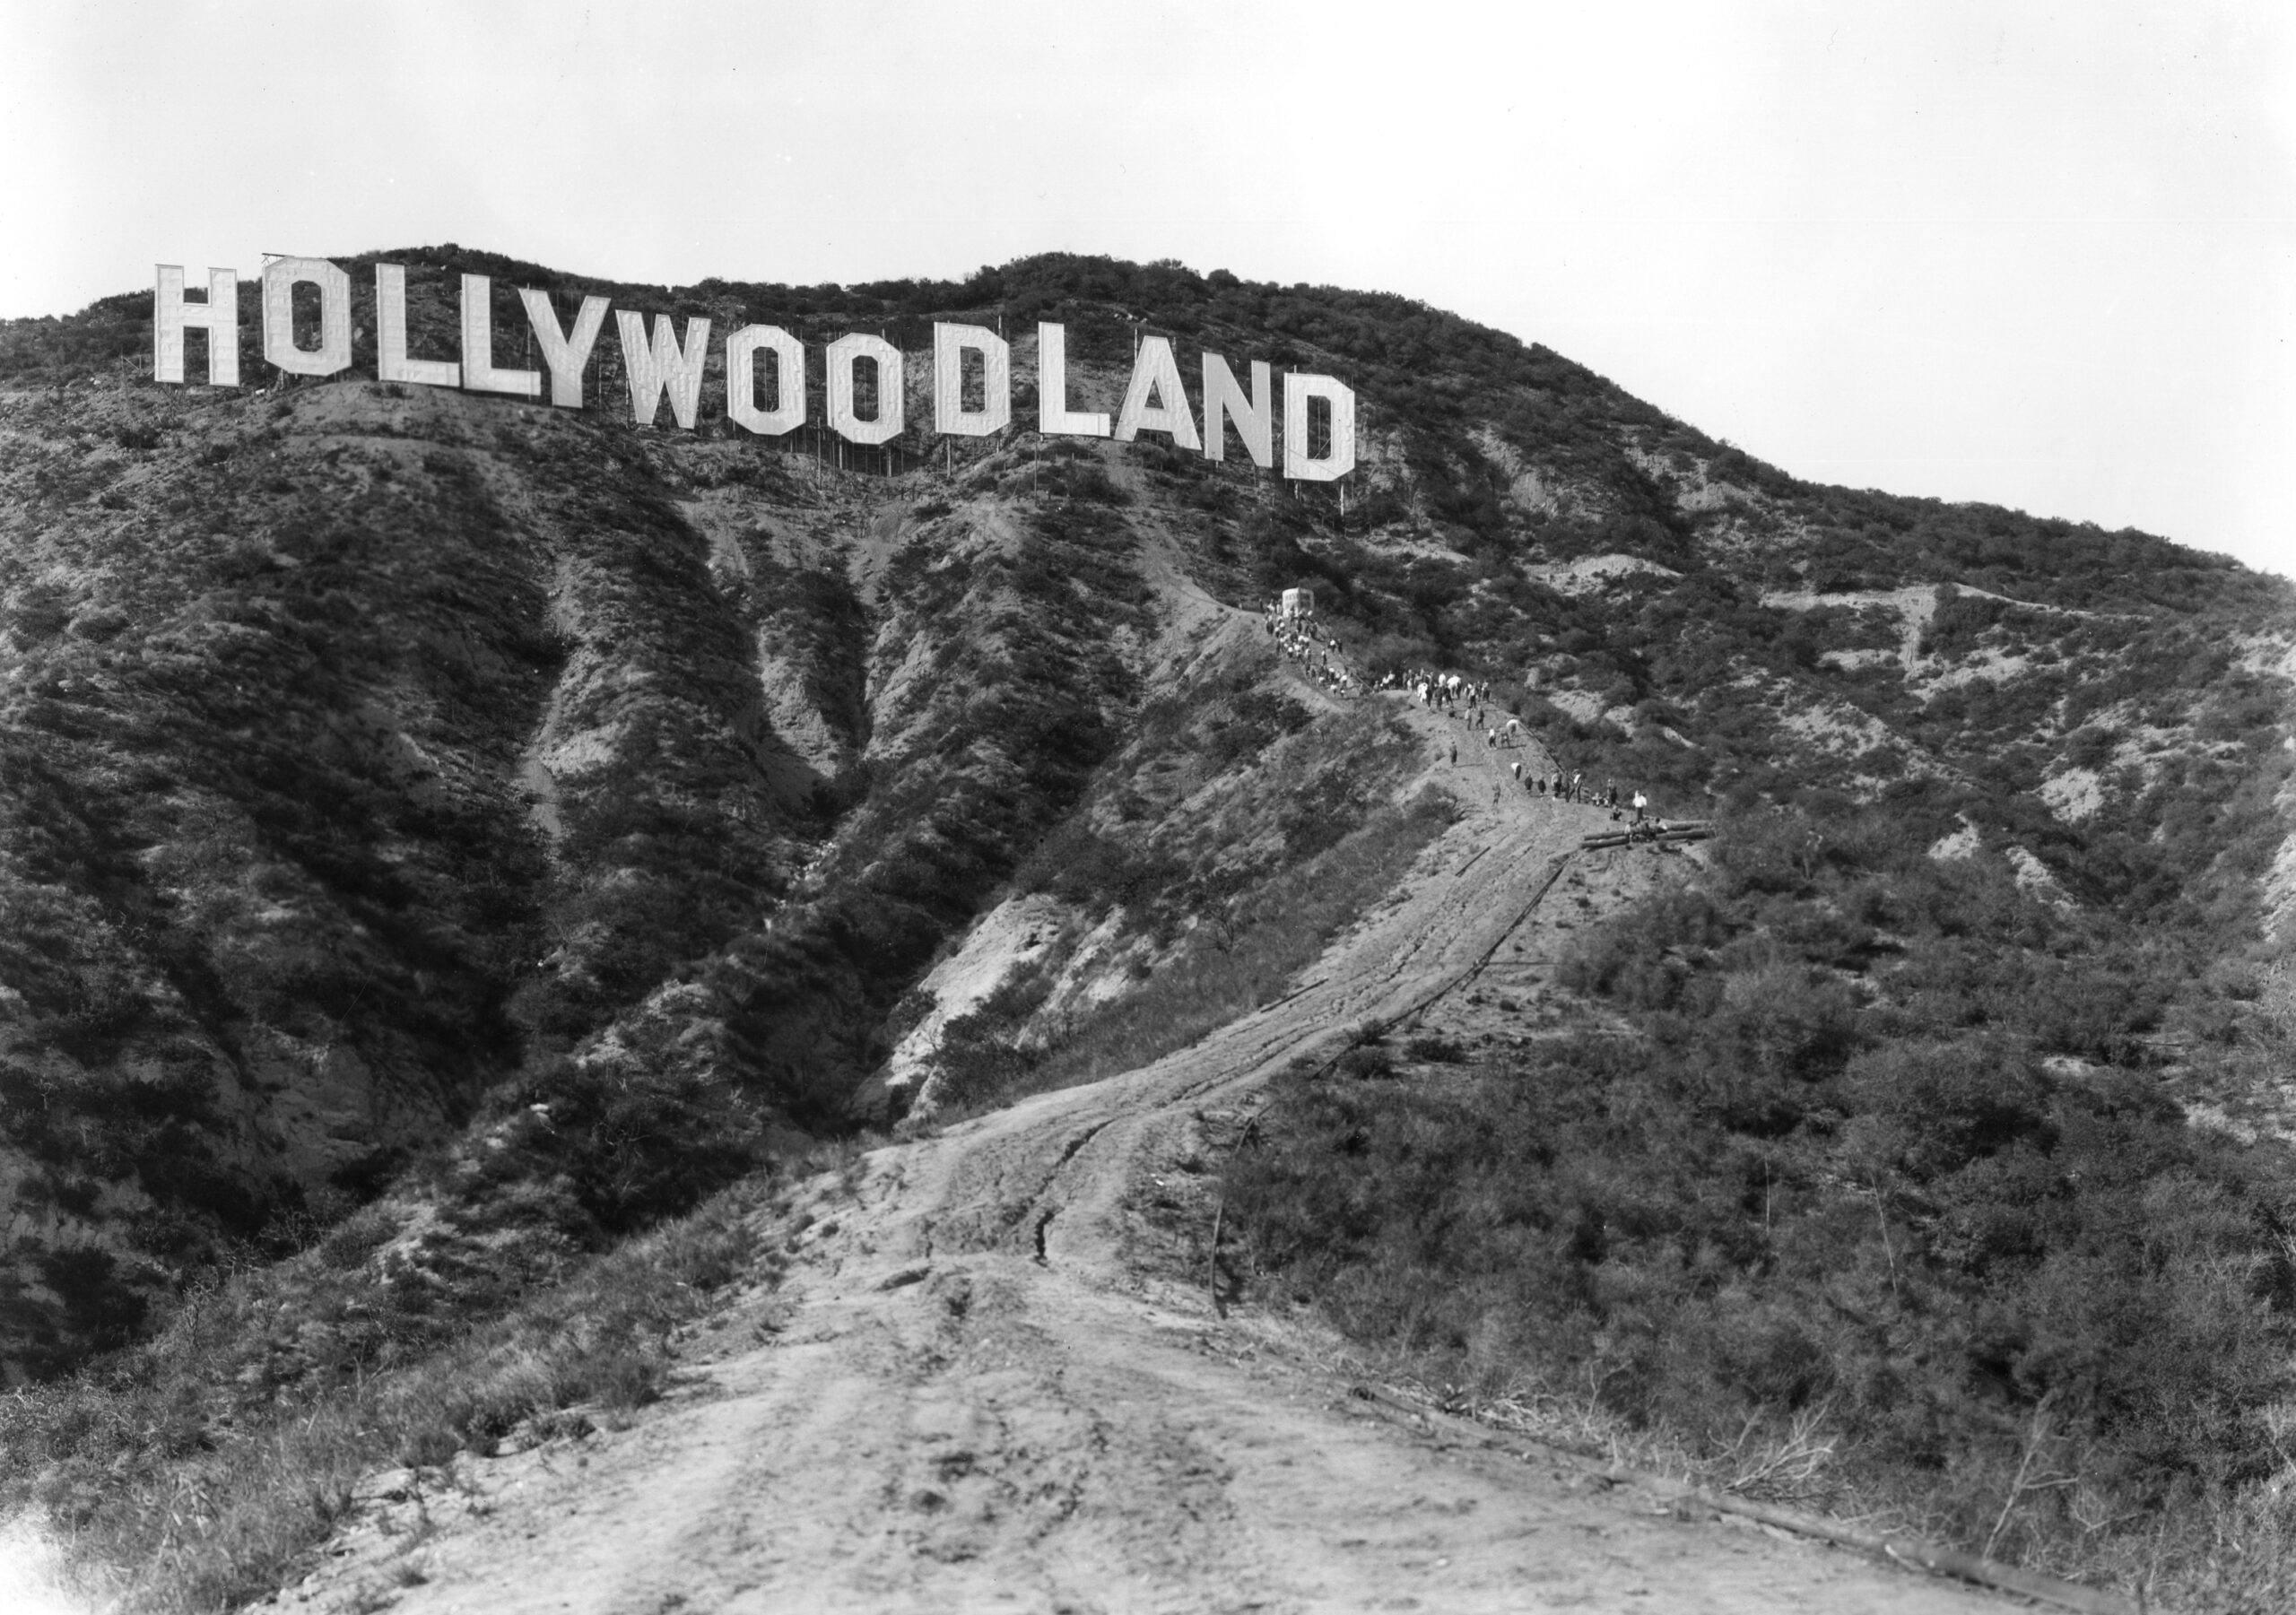 December 1923 Dedication of the Hollywoodland sign.